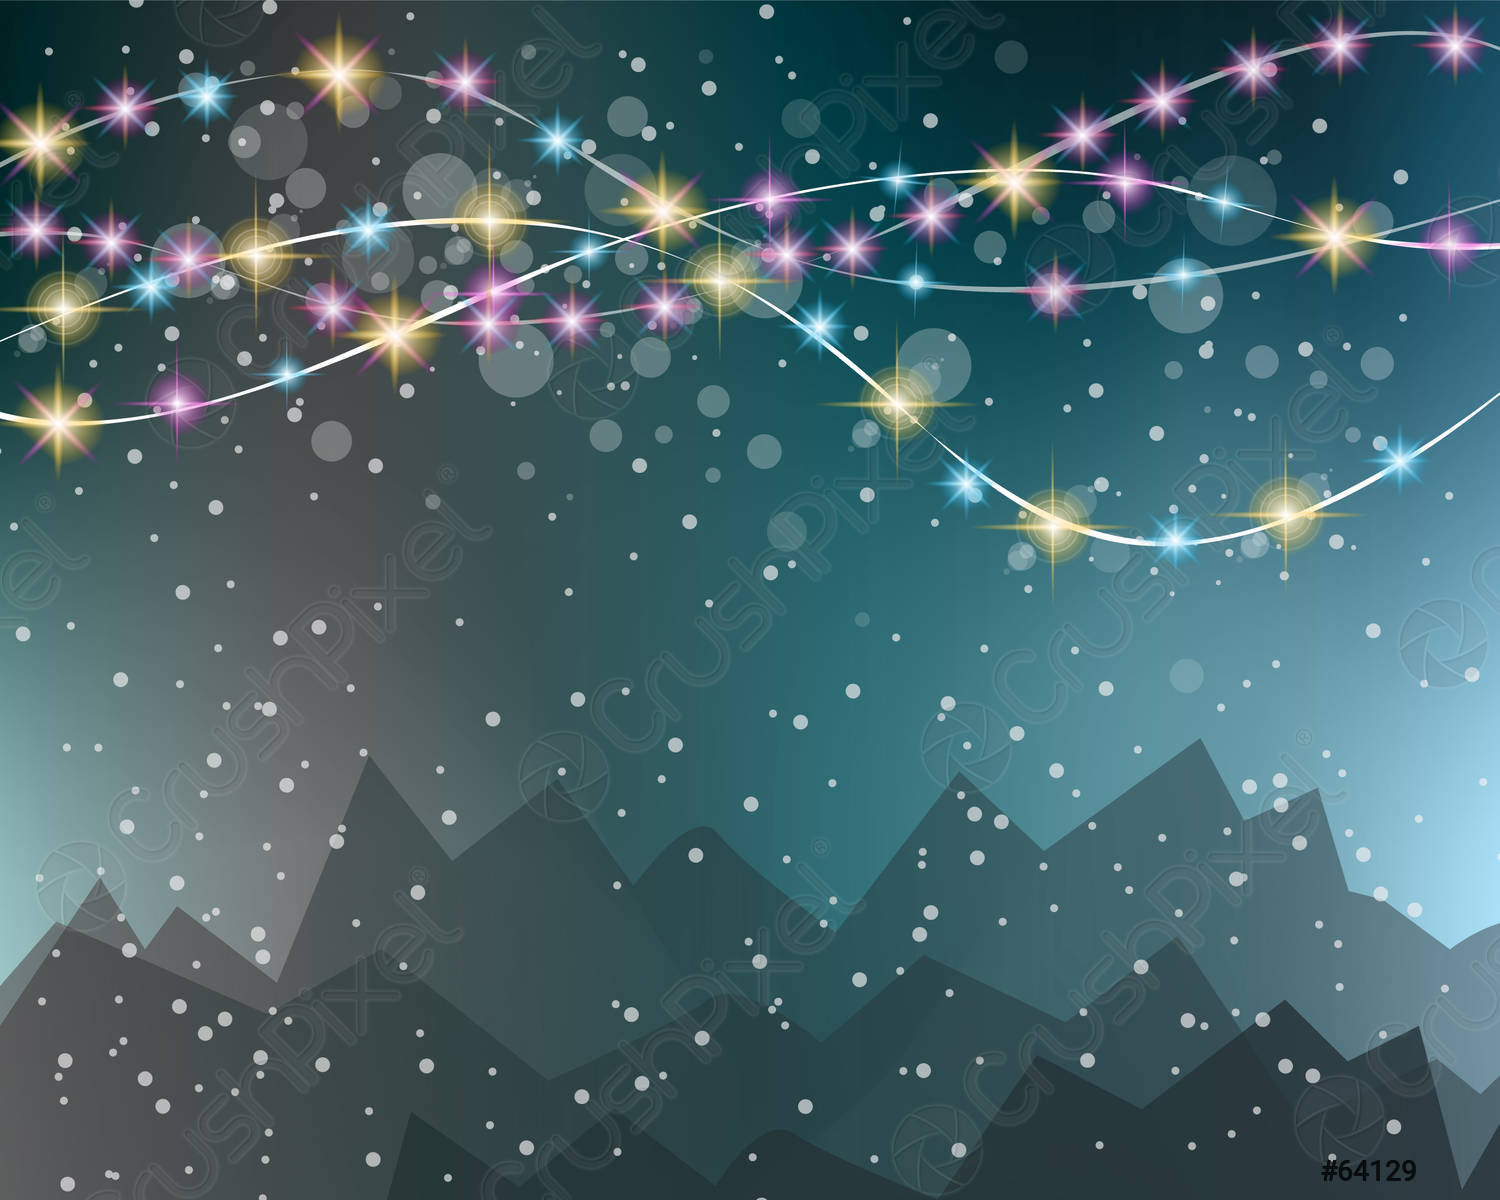 Christmas Lights Background for your seasonal wallpaper